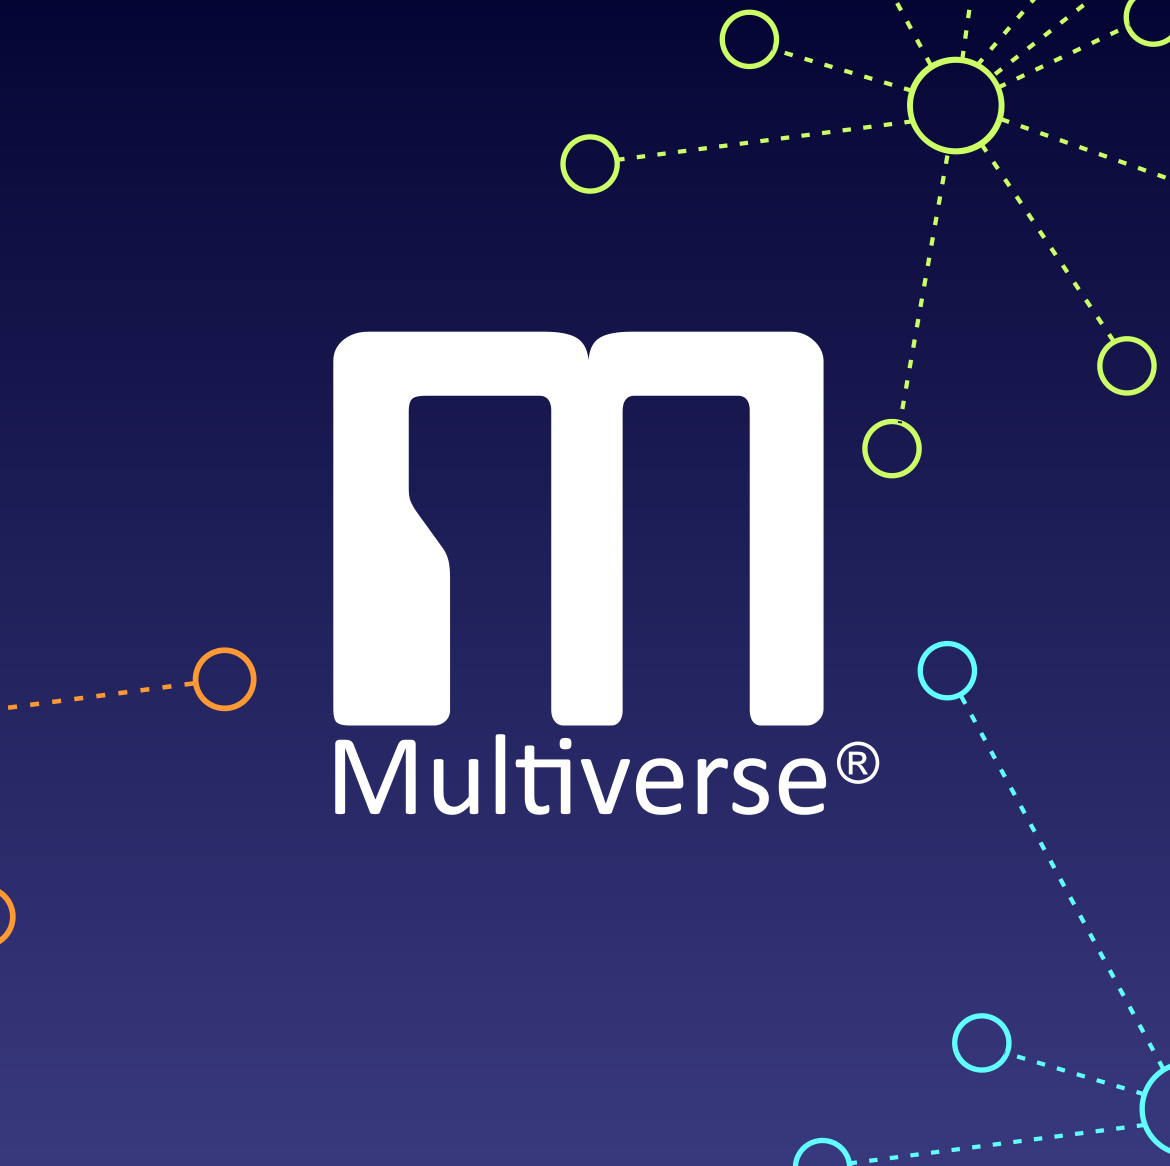 Multiverse - Logo - White over Navy - square